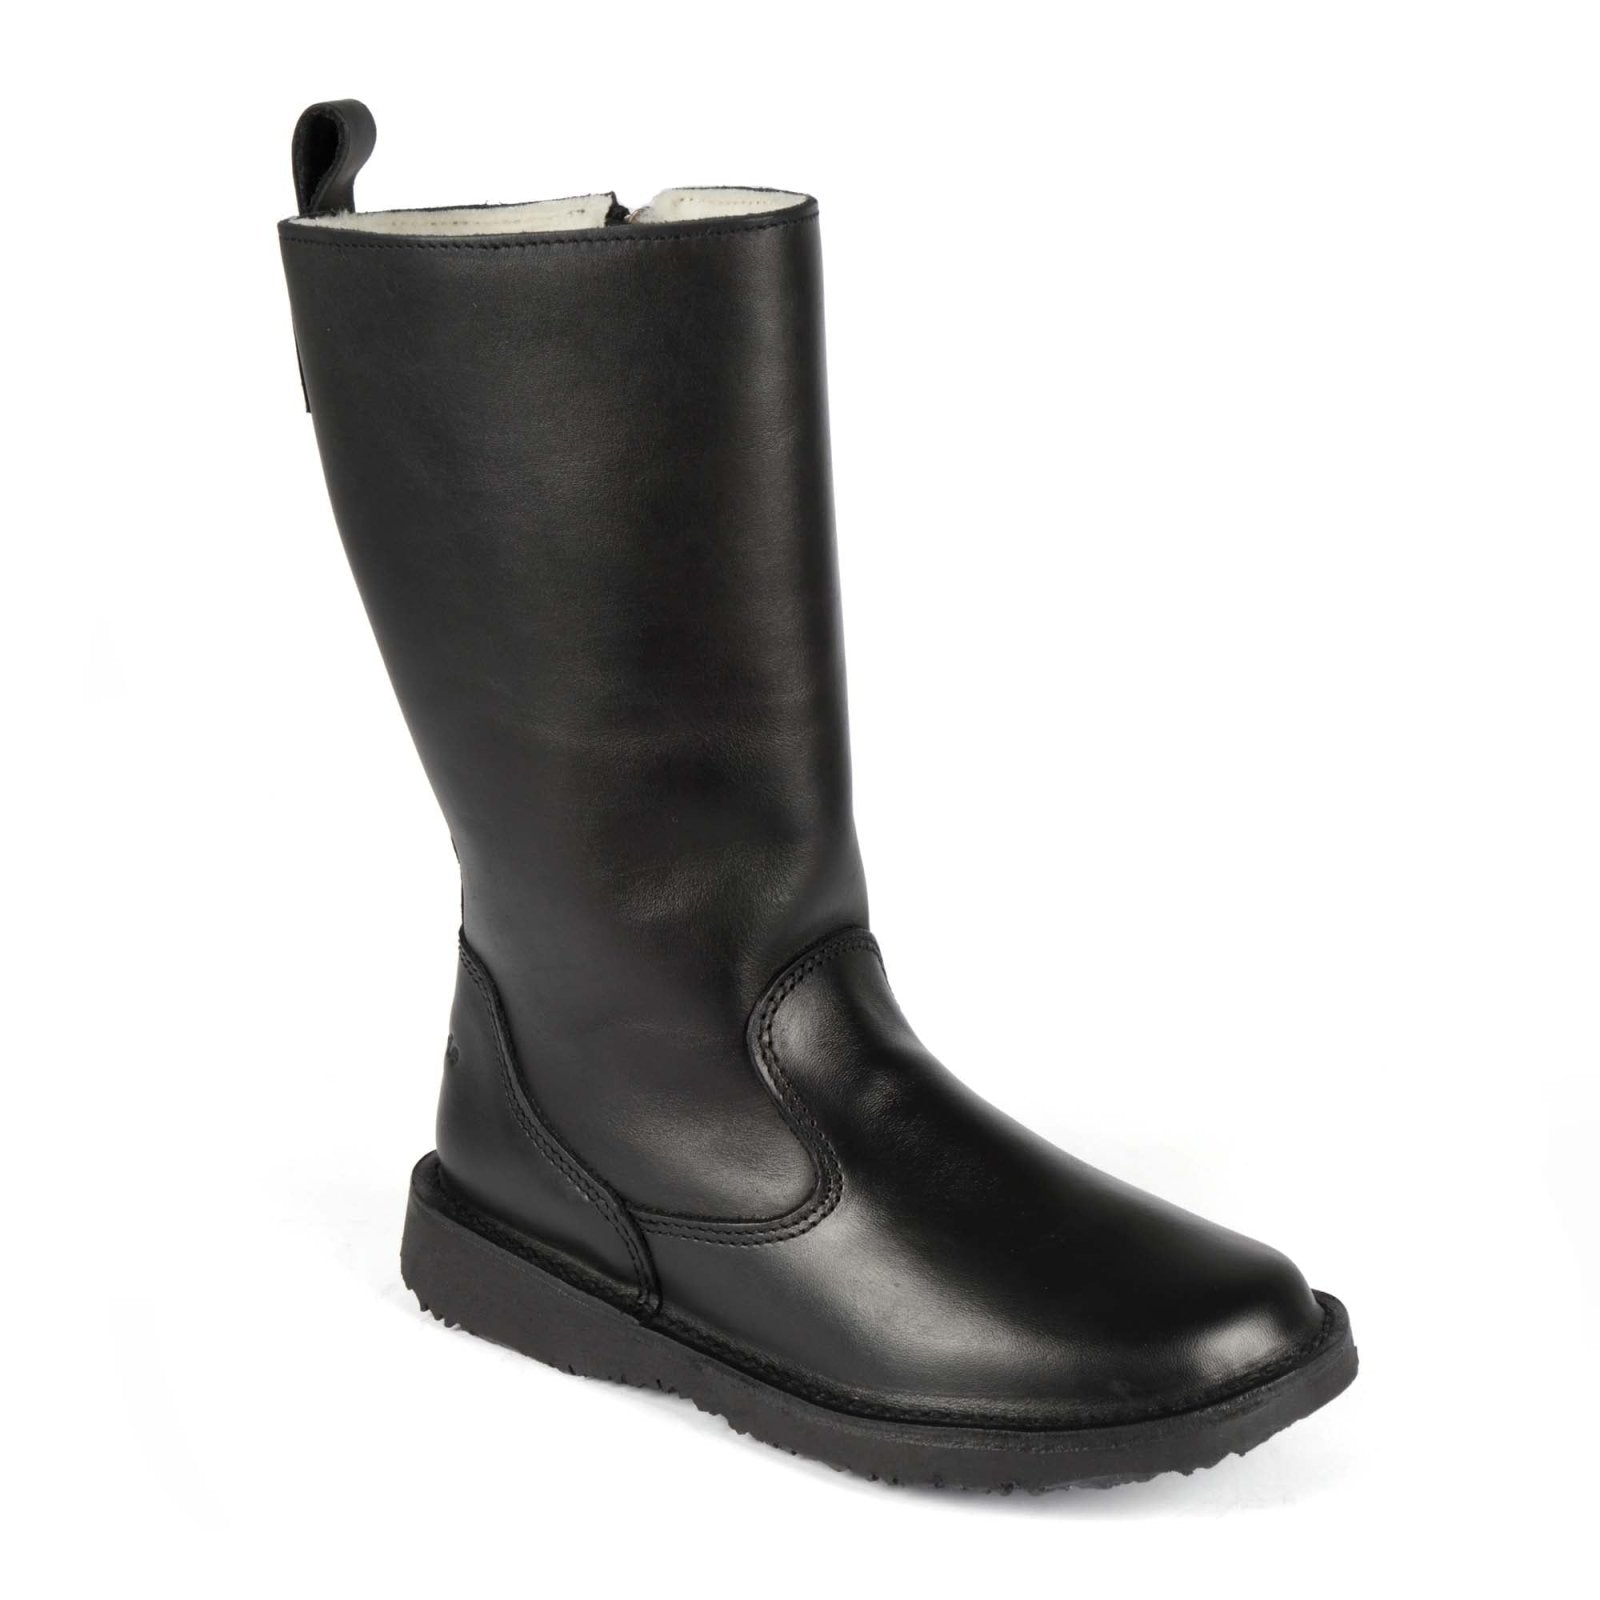 Eskimo 100% wool-lined ladies premium leather boot - Bundu Black - Freestyle SA Proudly local leather boots veldskoens vellies leather shoes suede veldskoens